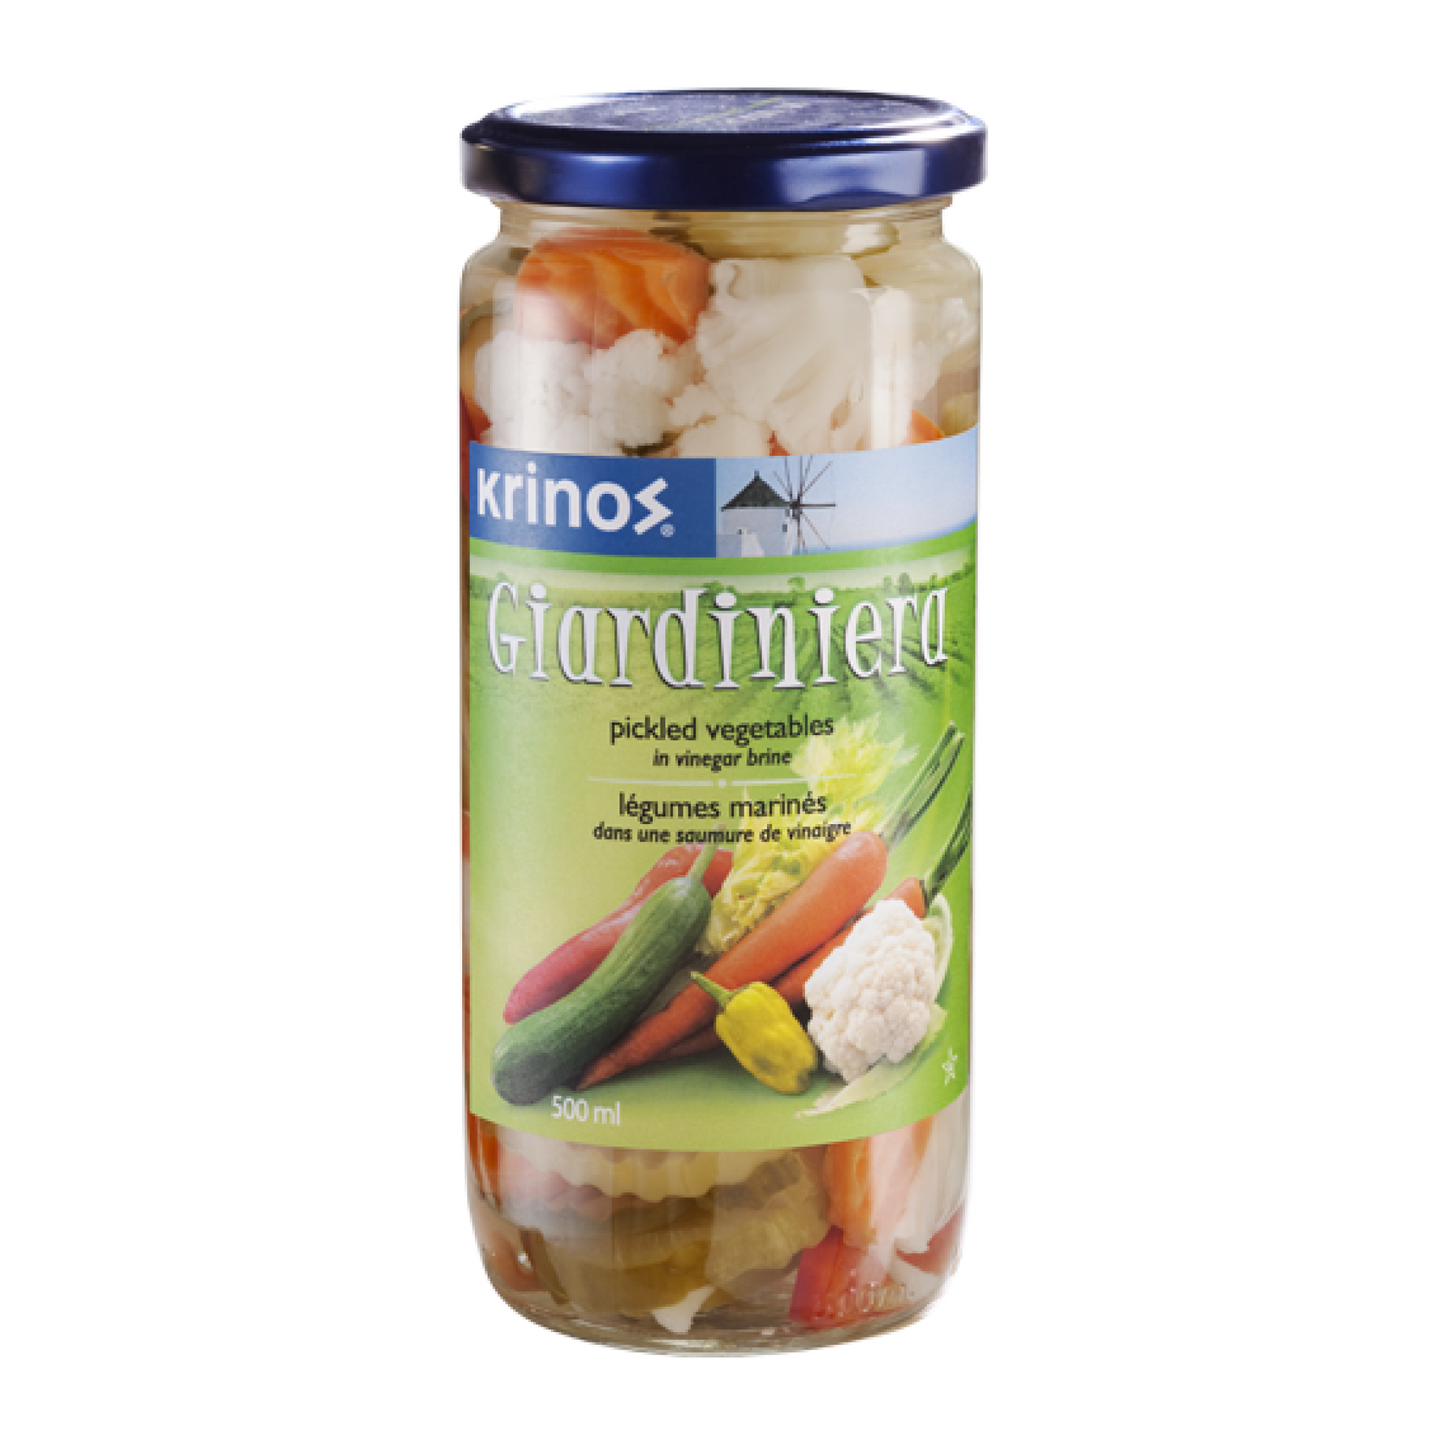 Krinos Giardiniera Pickled Vegetables in Vinegar Brine 500ml